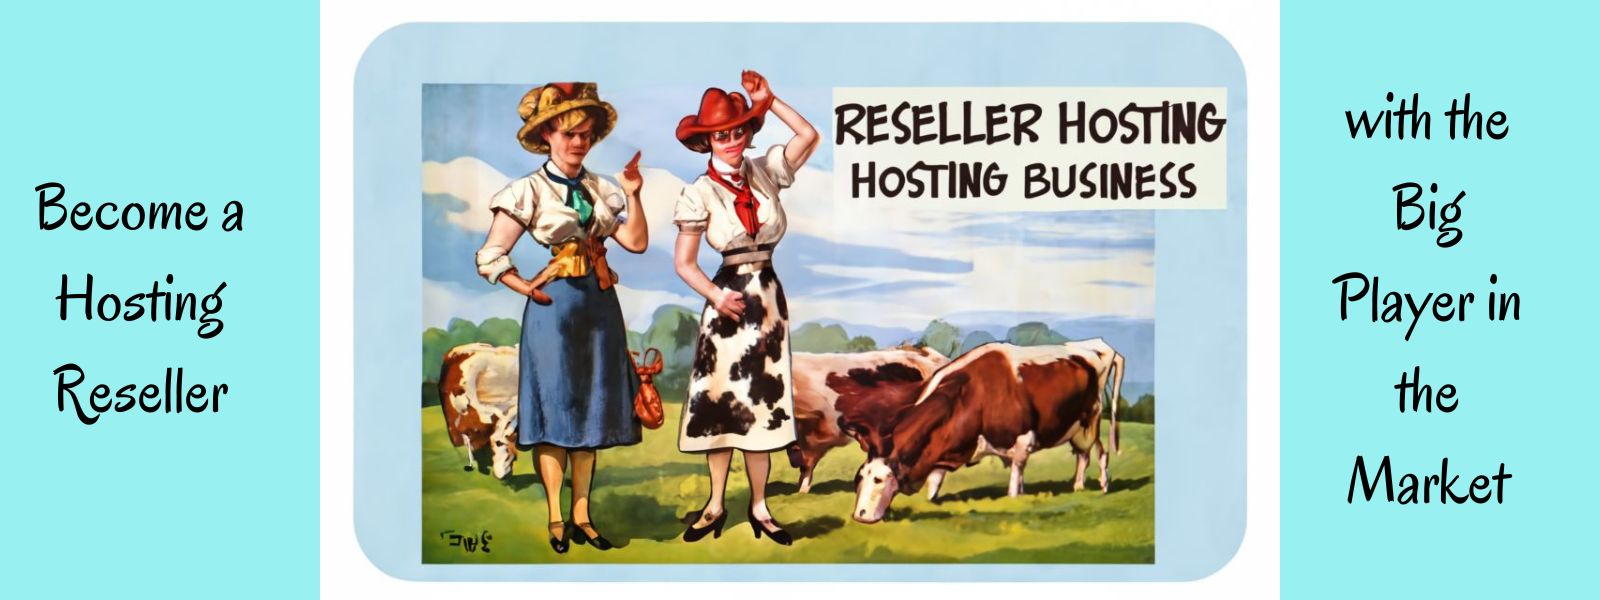 How Does Reseller Hosting Work